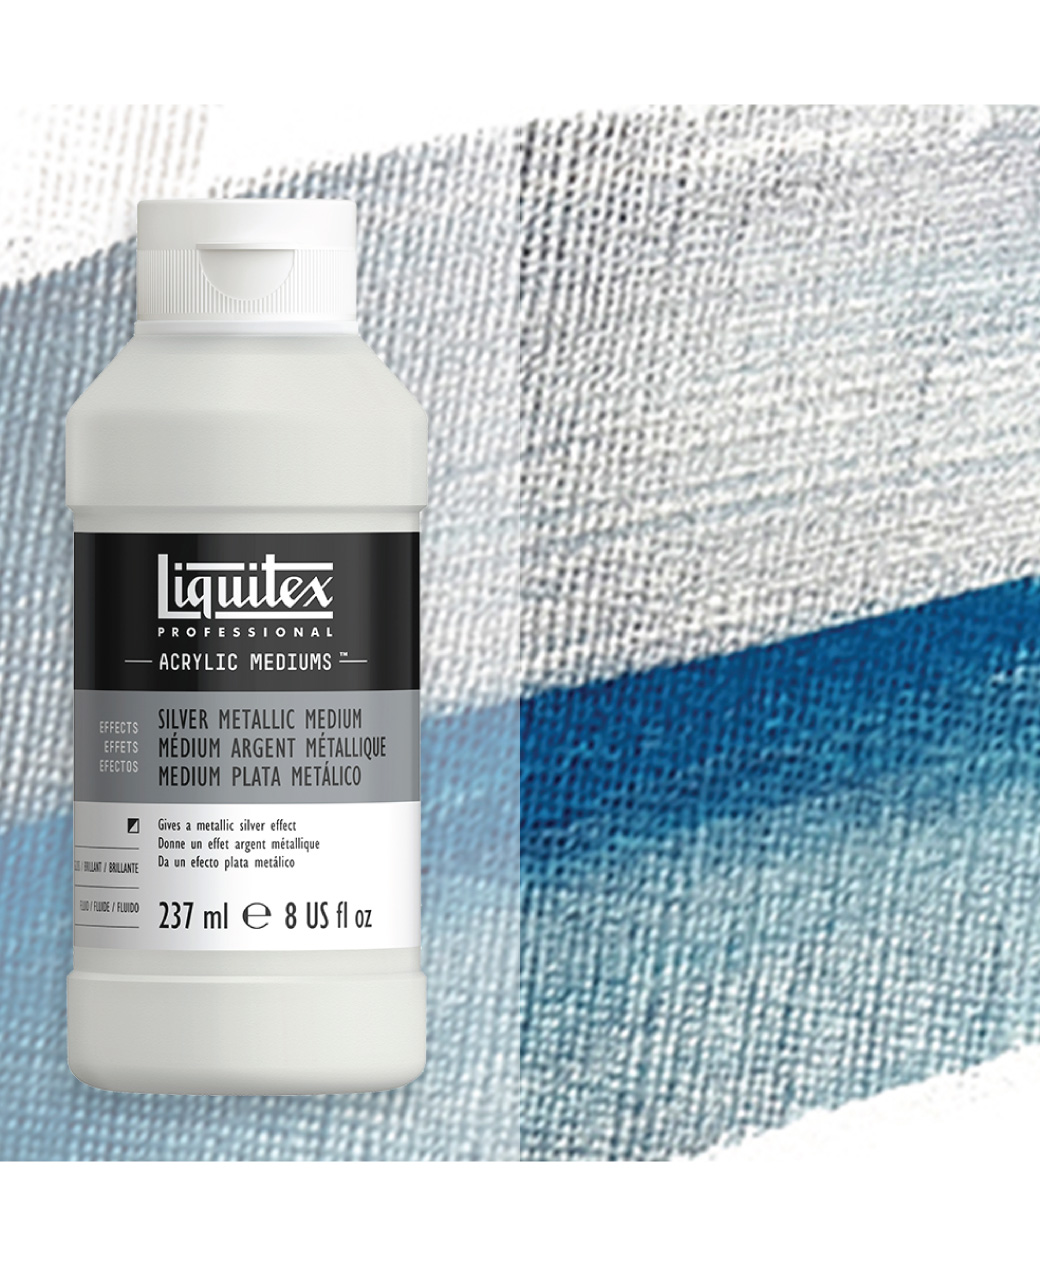 LIQUITEX Professional Airbrush Medium 237ml - Acrylic Medium